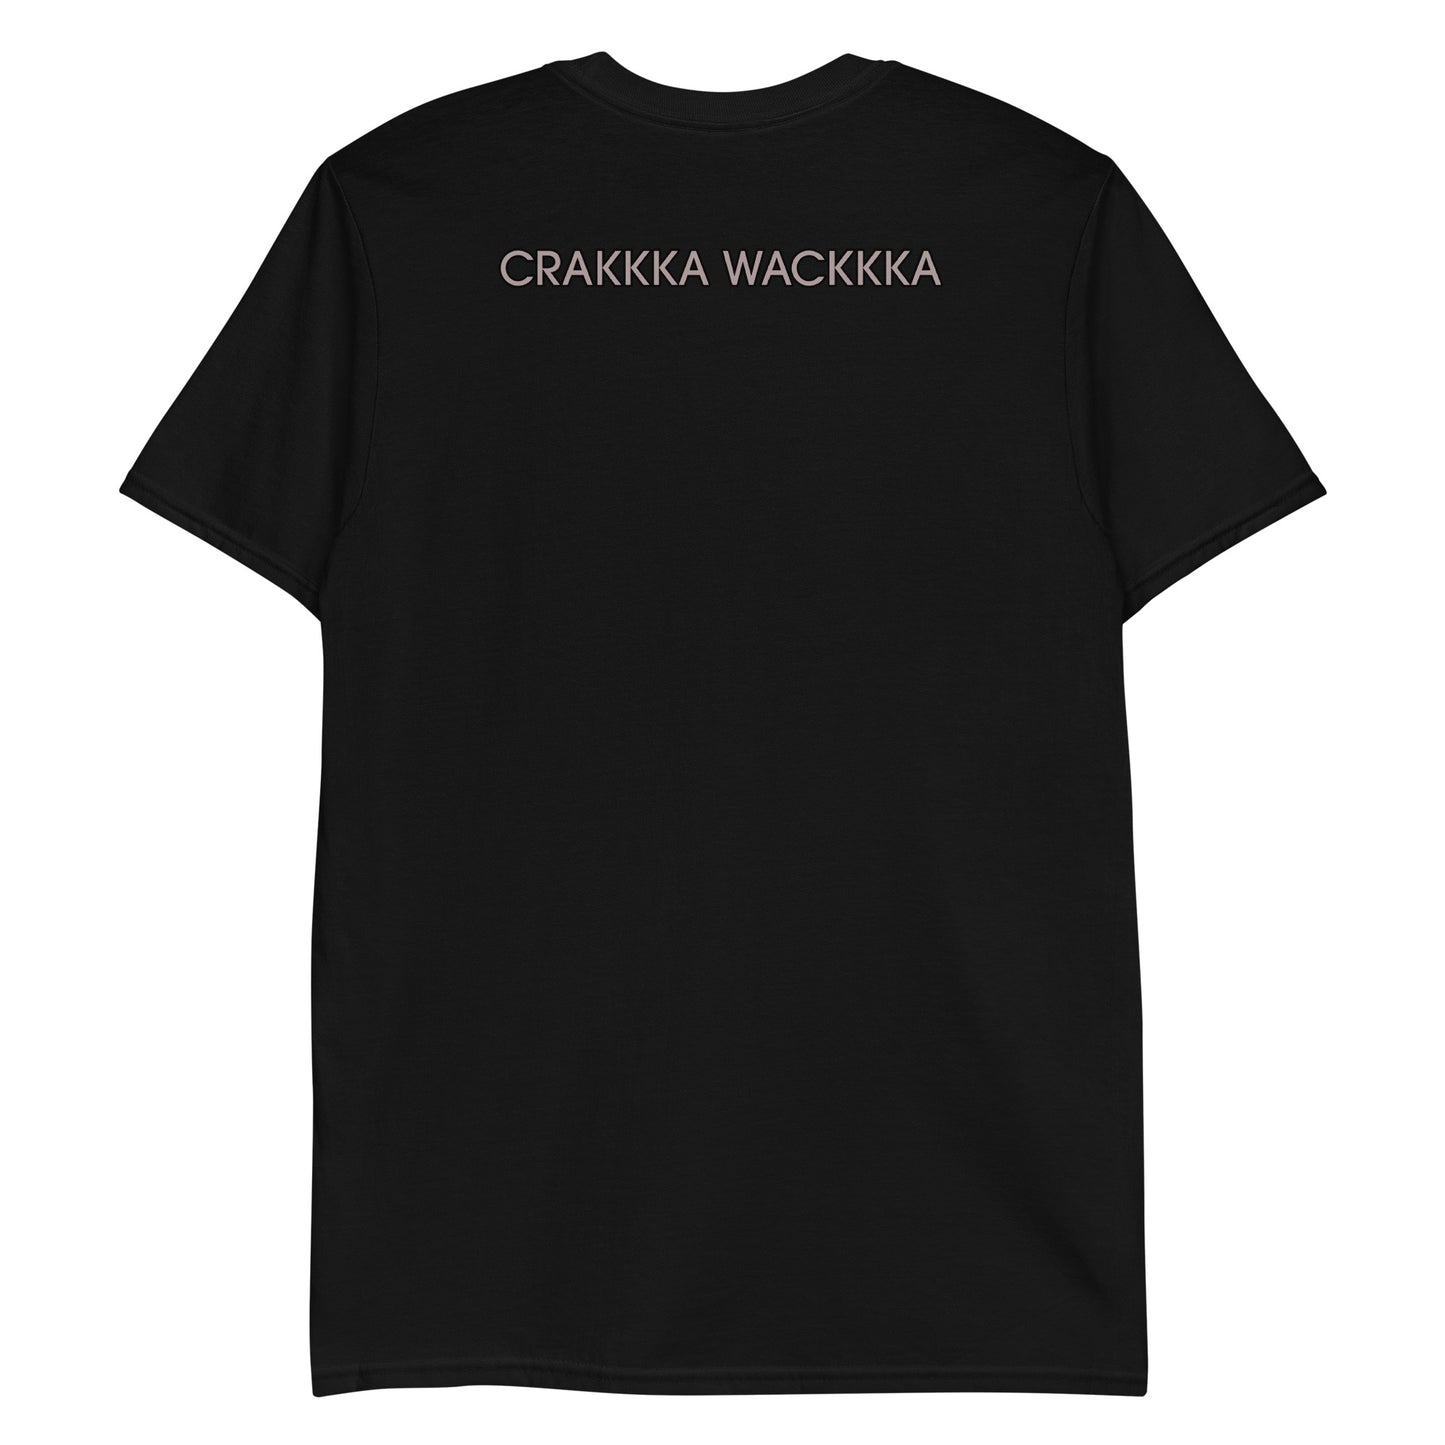 CRAKKKA WACKKKA - Short-Sleeve Unisex T-Shirt